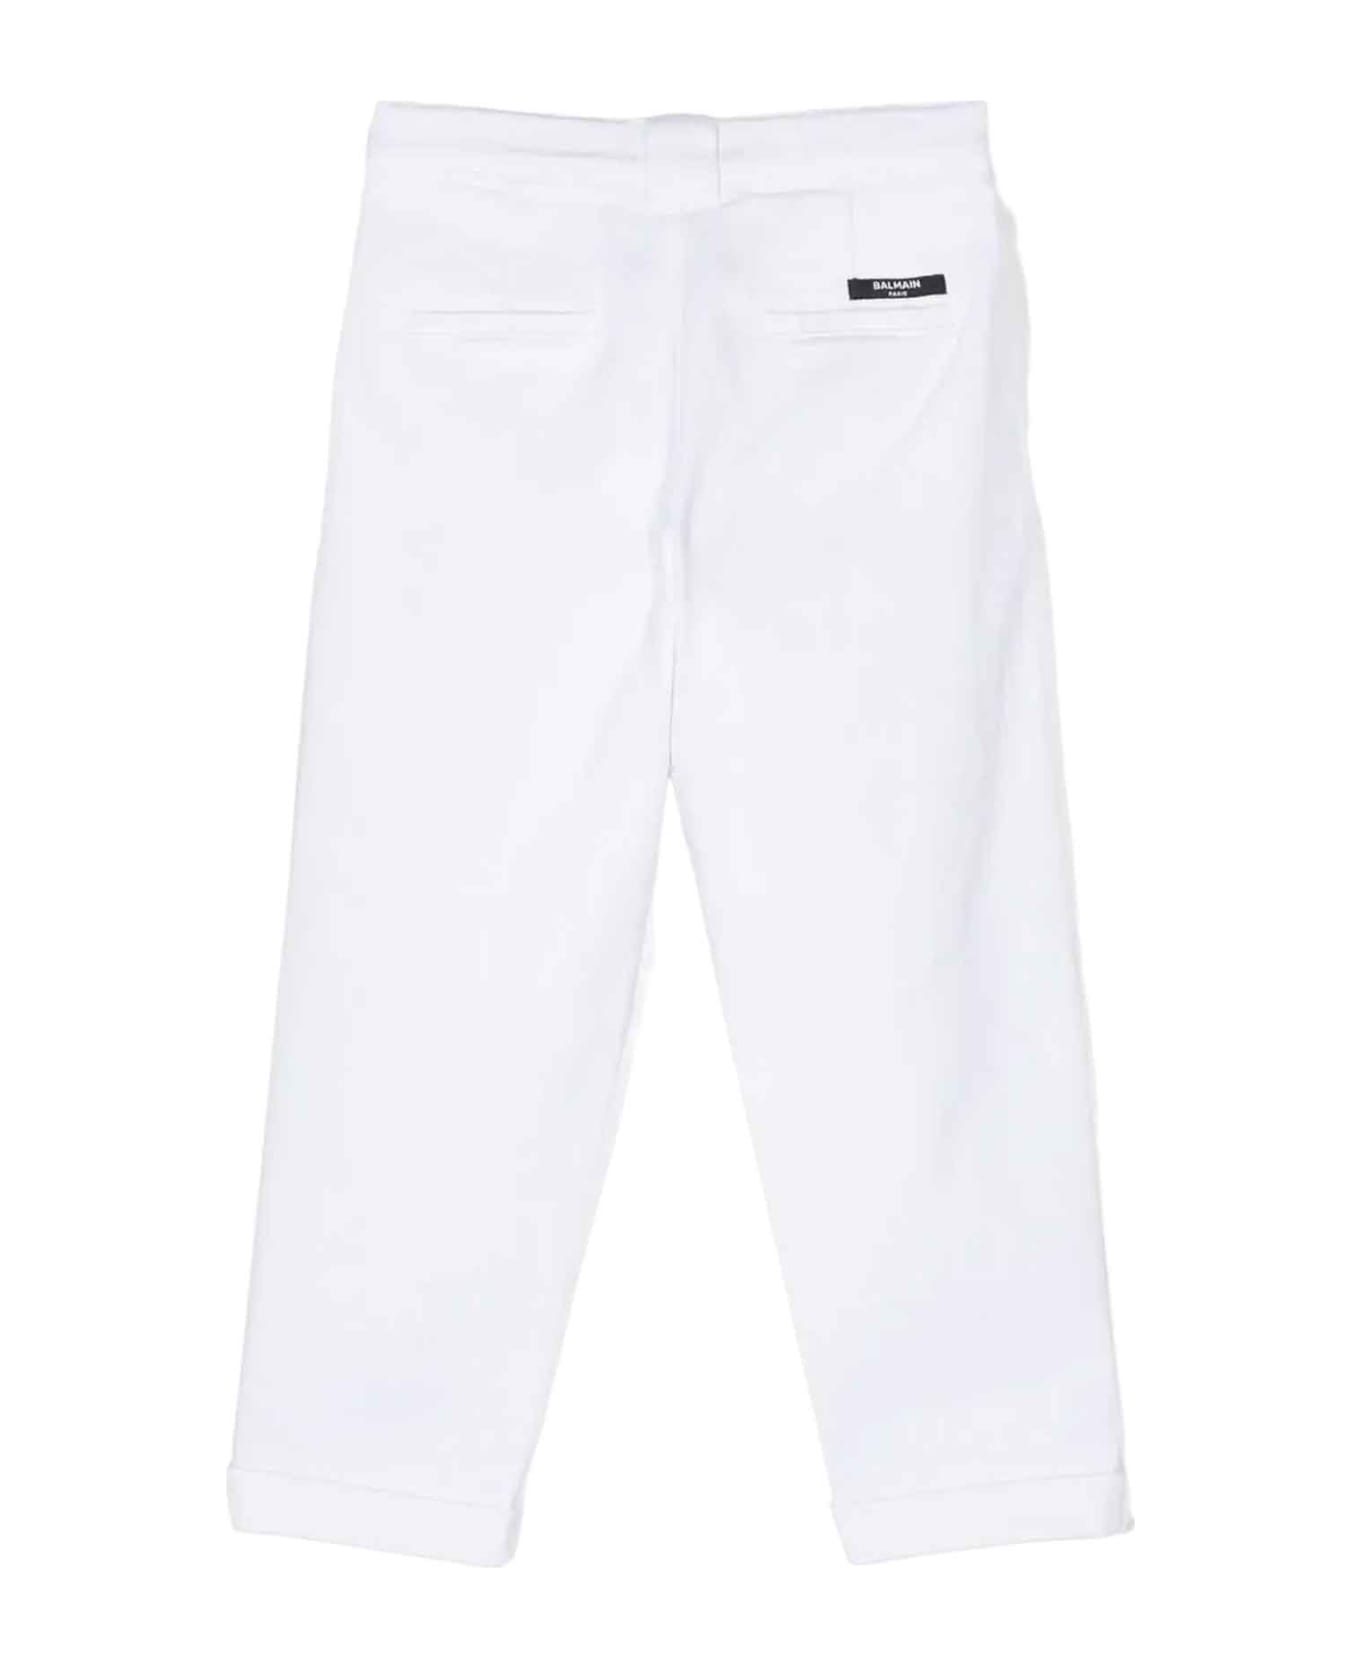 Balmain White Trousers Unisex - Bianco ボトムス